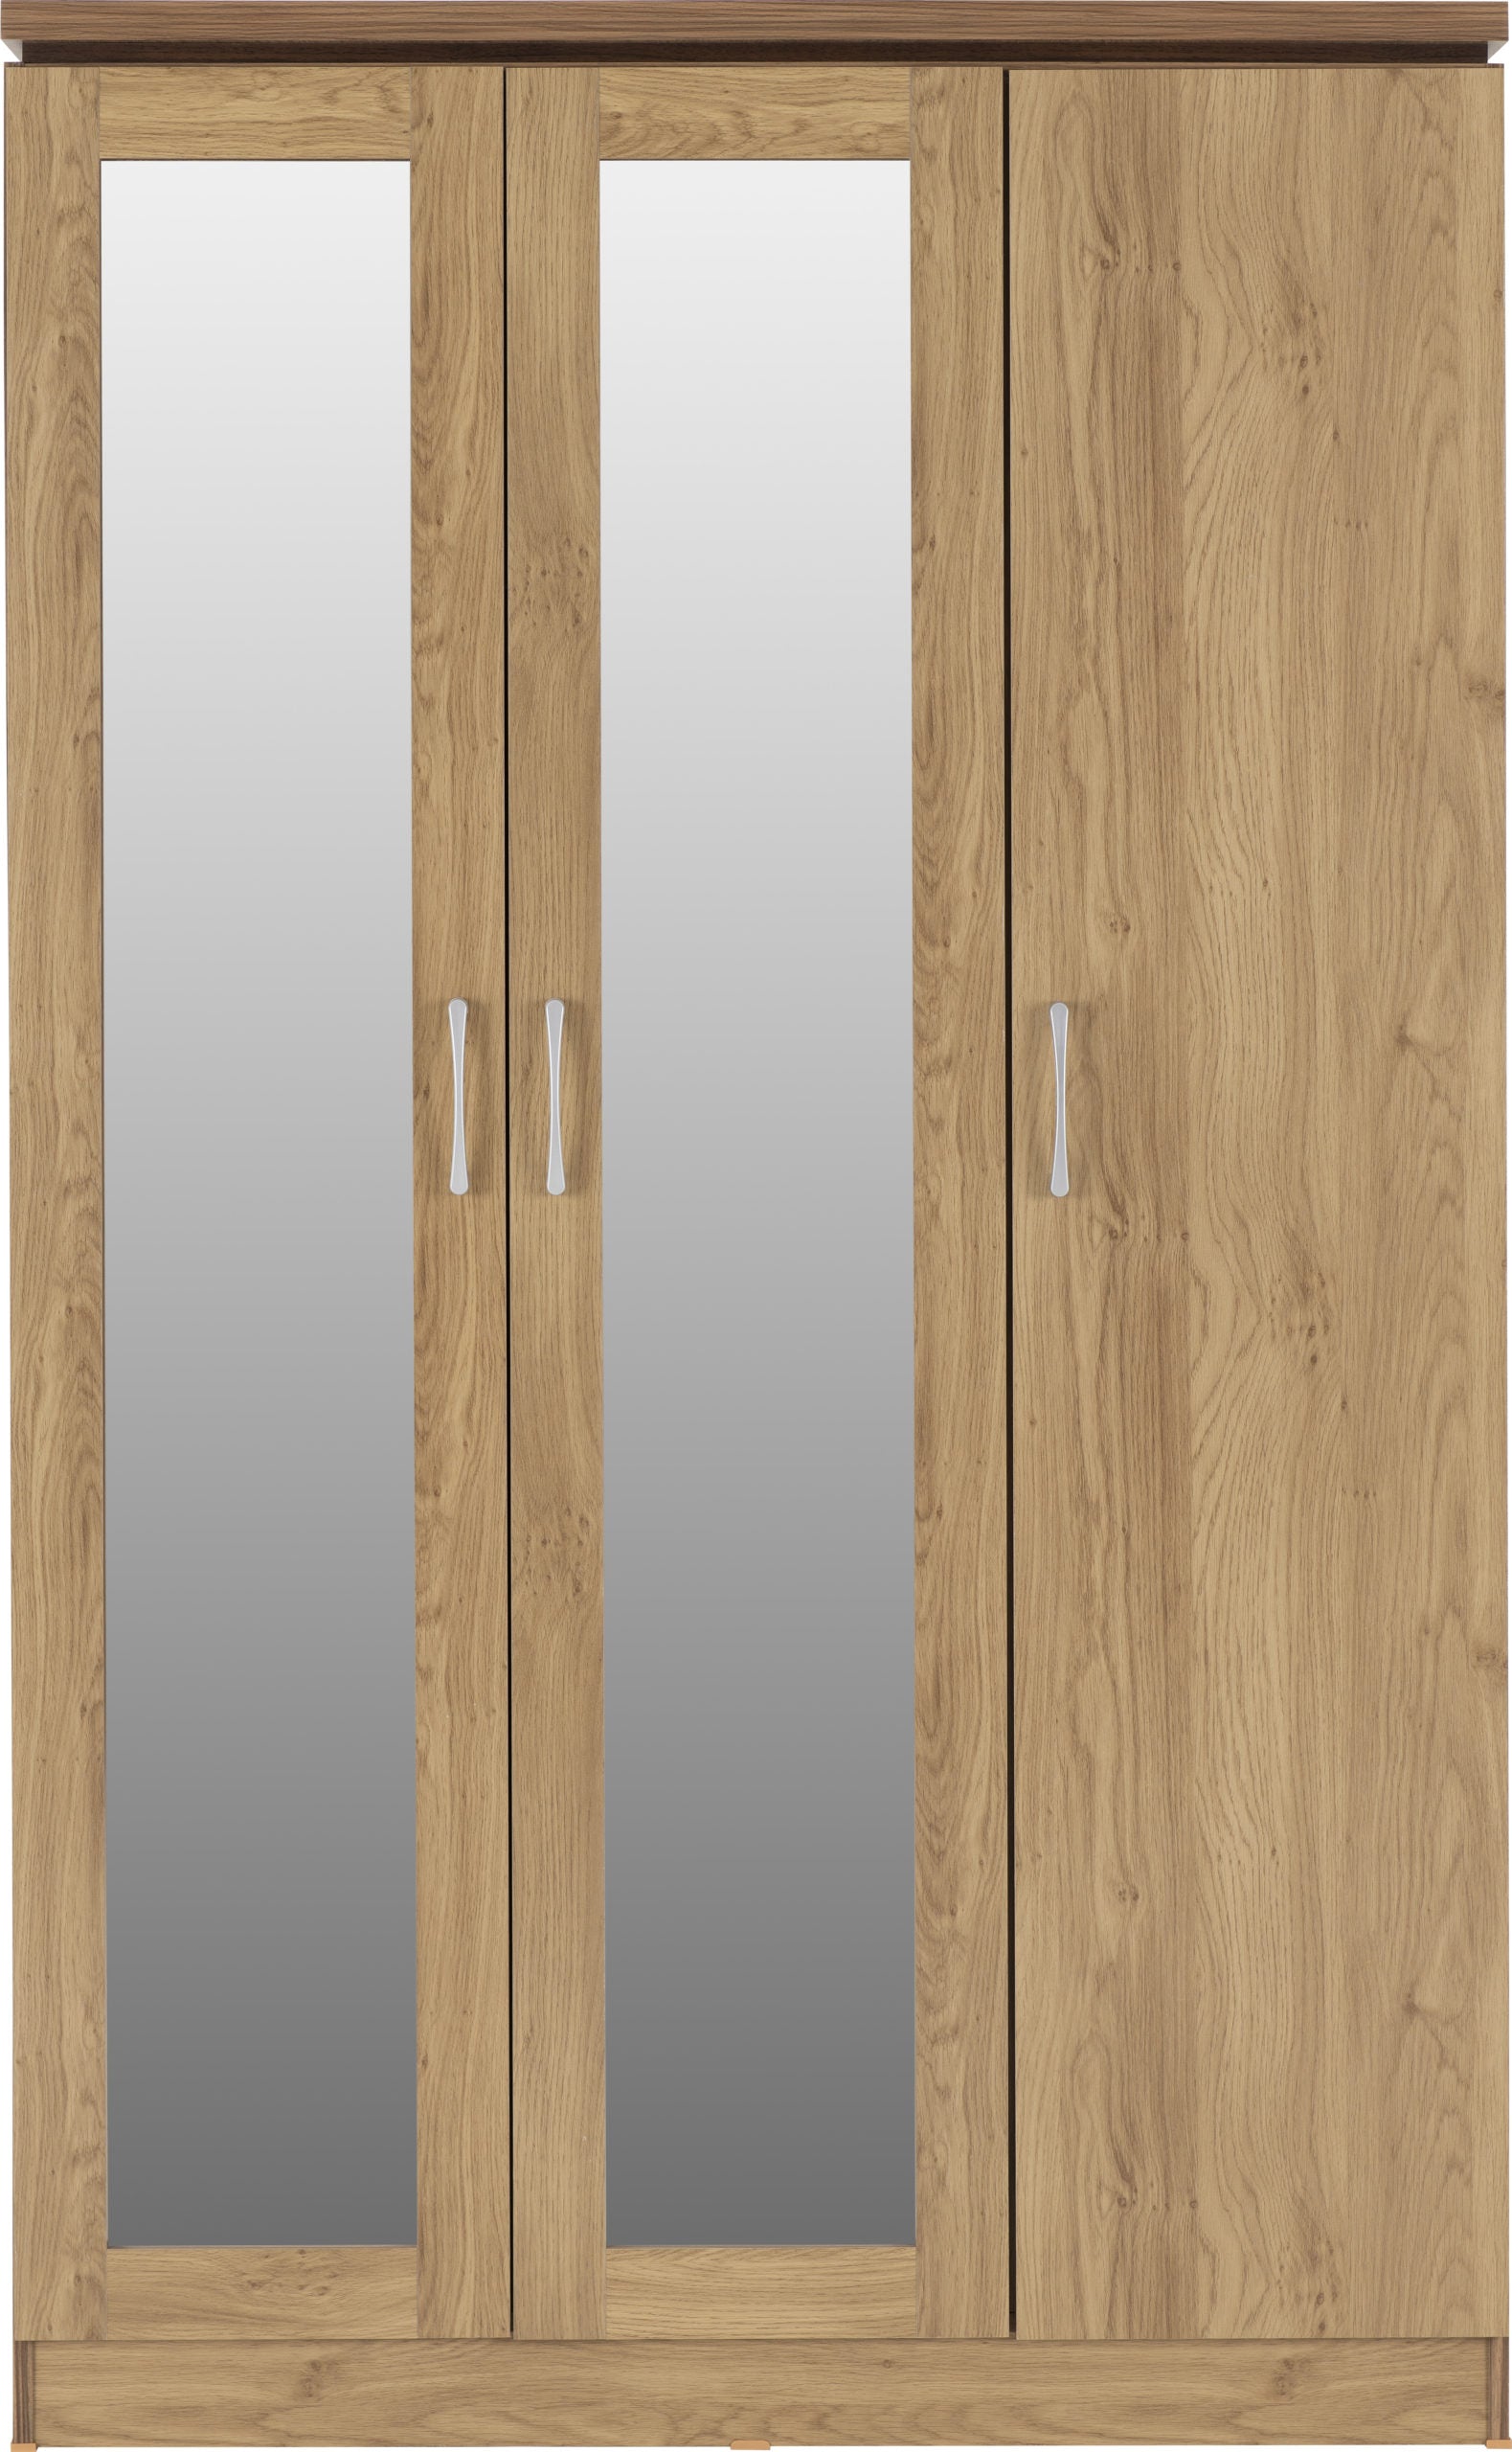 Charles 3 Door All Hanging Wardrobe in Oak Effect Veneer with Walnut Trim